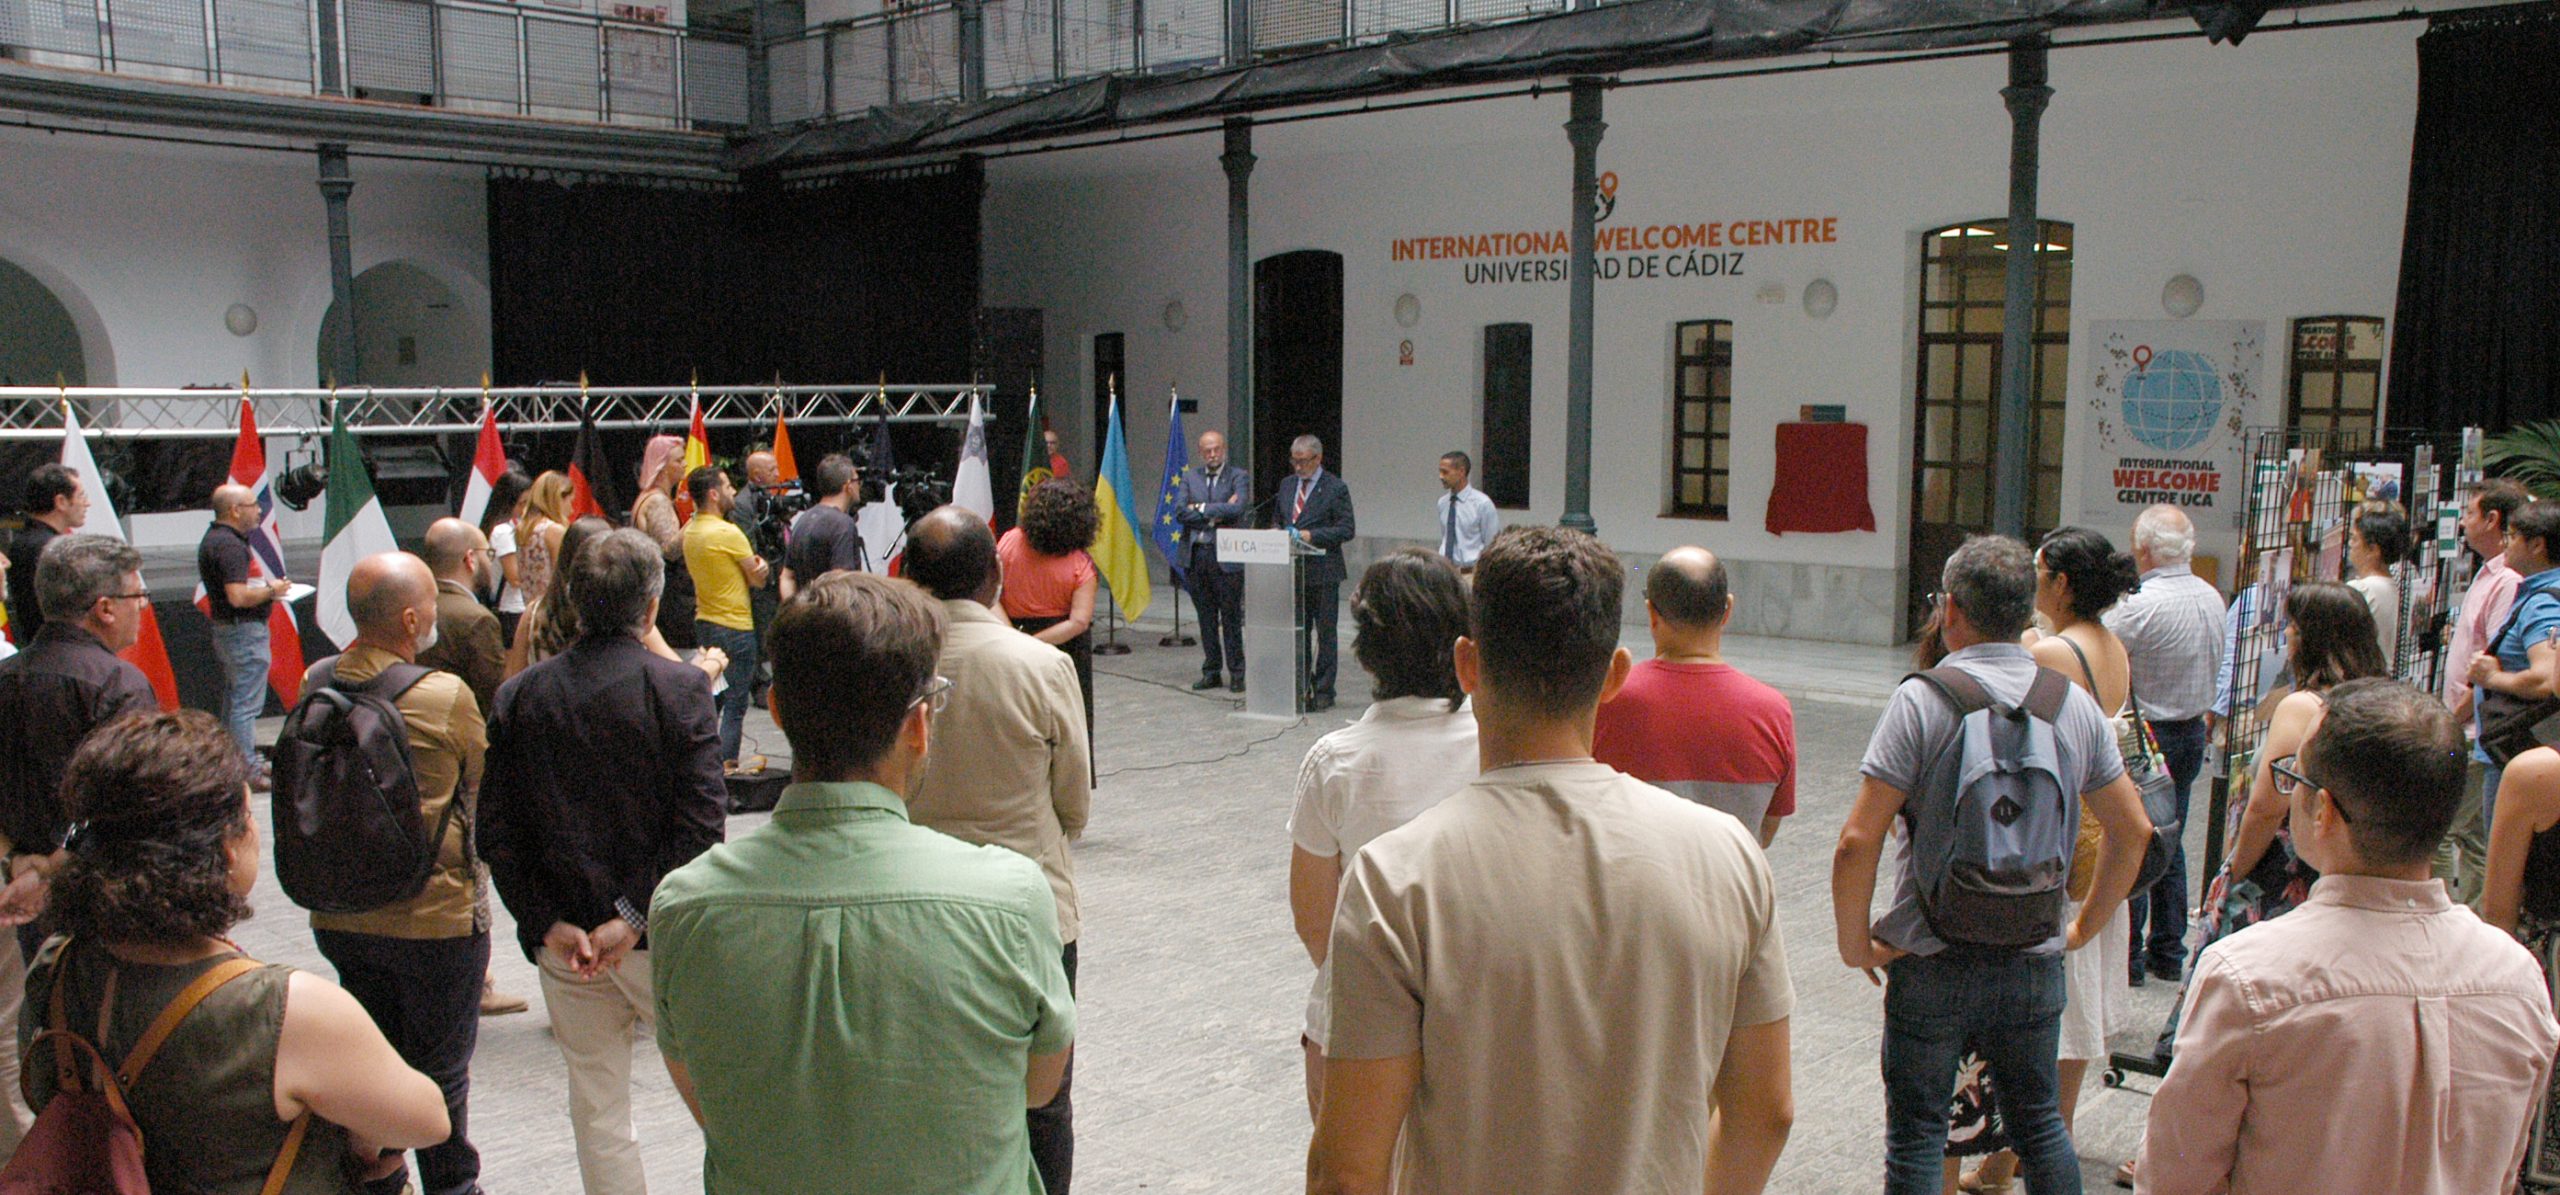 La Universidad de Cádiz inaugura su ‘International Welcome Center’